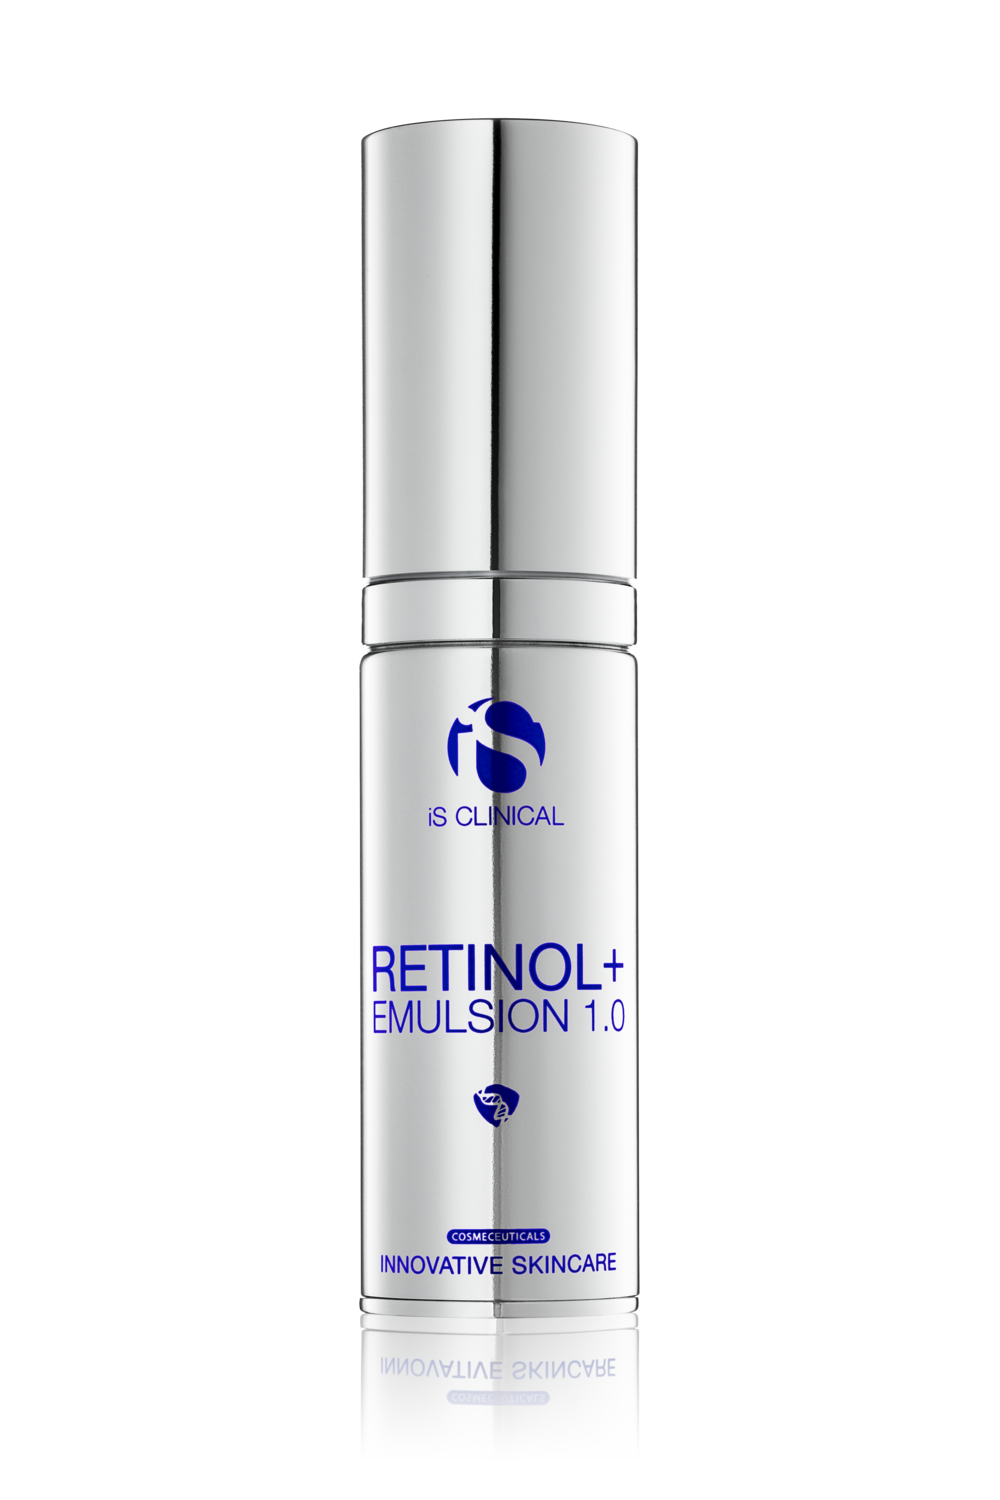 IS-CLINICAL® Retinol+ Emulsion 1.0